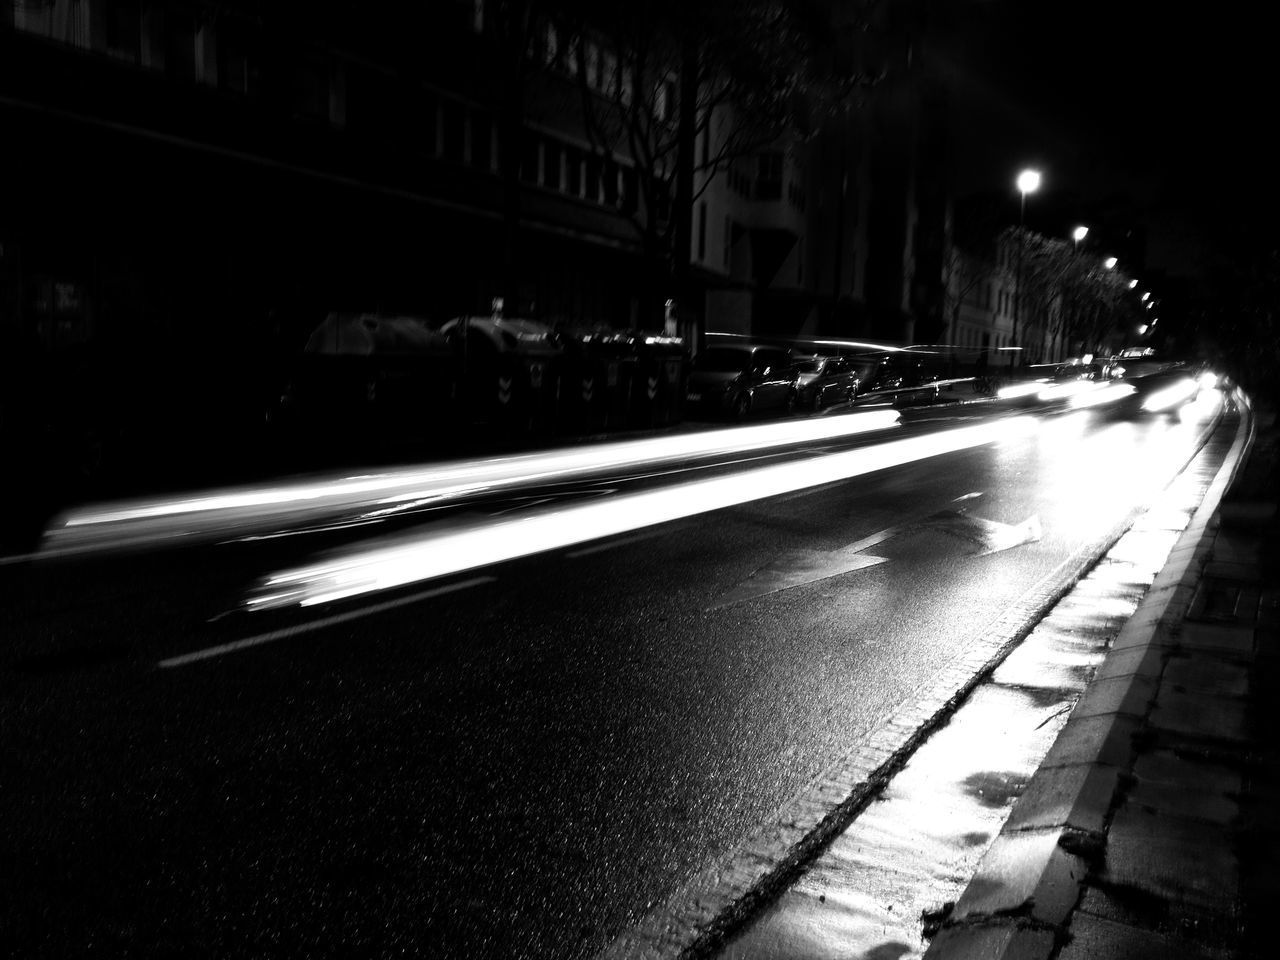 LIGHT TRAILS ON CITY STREET